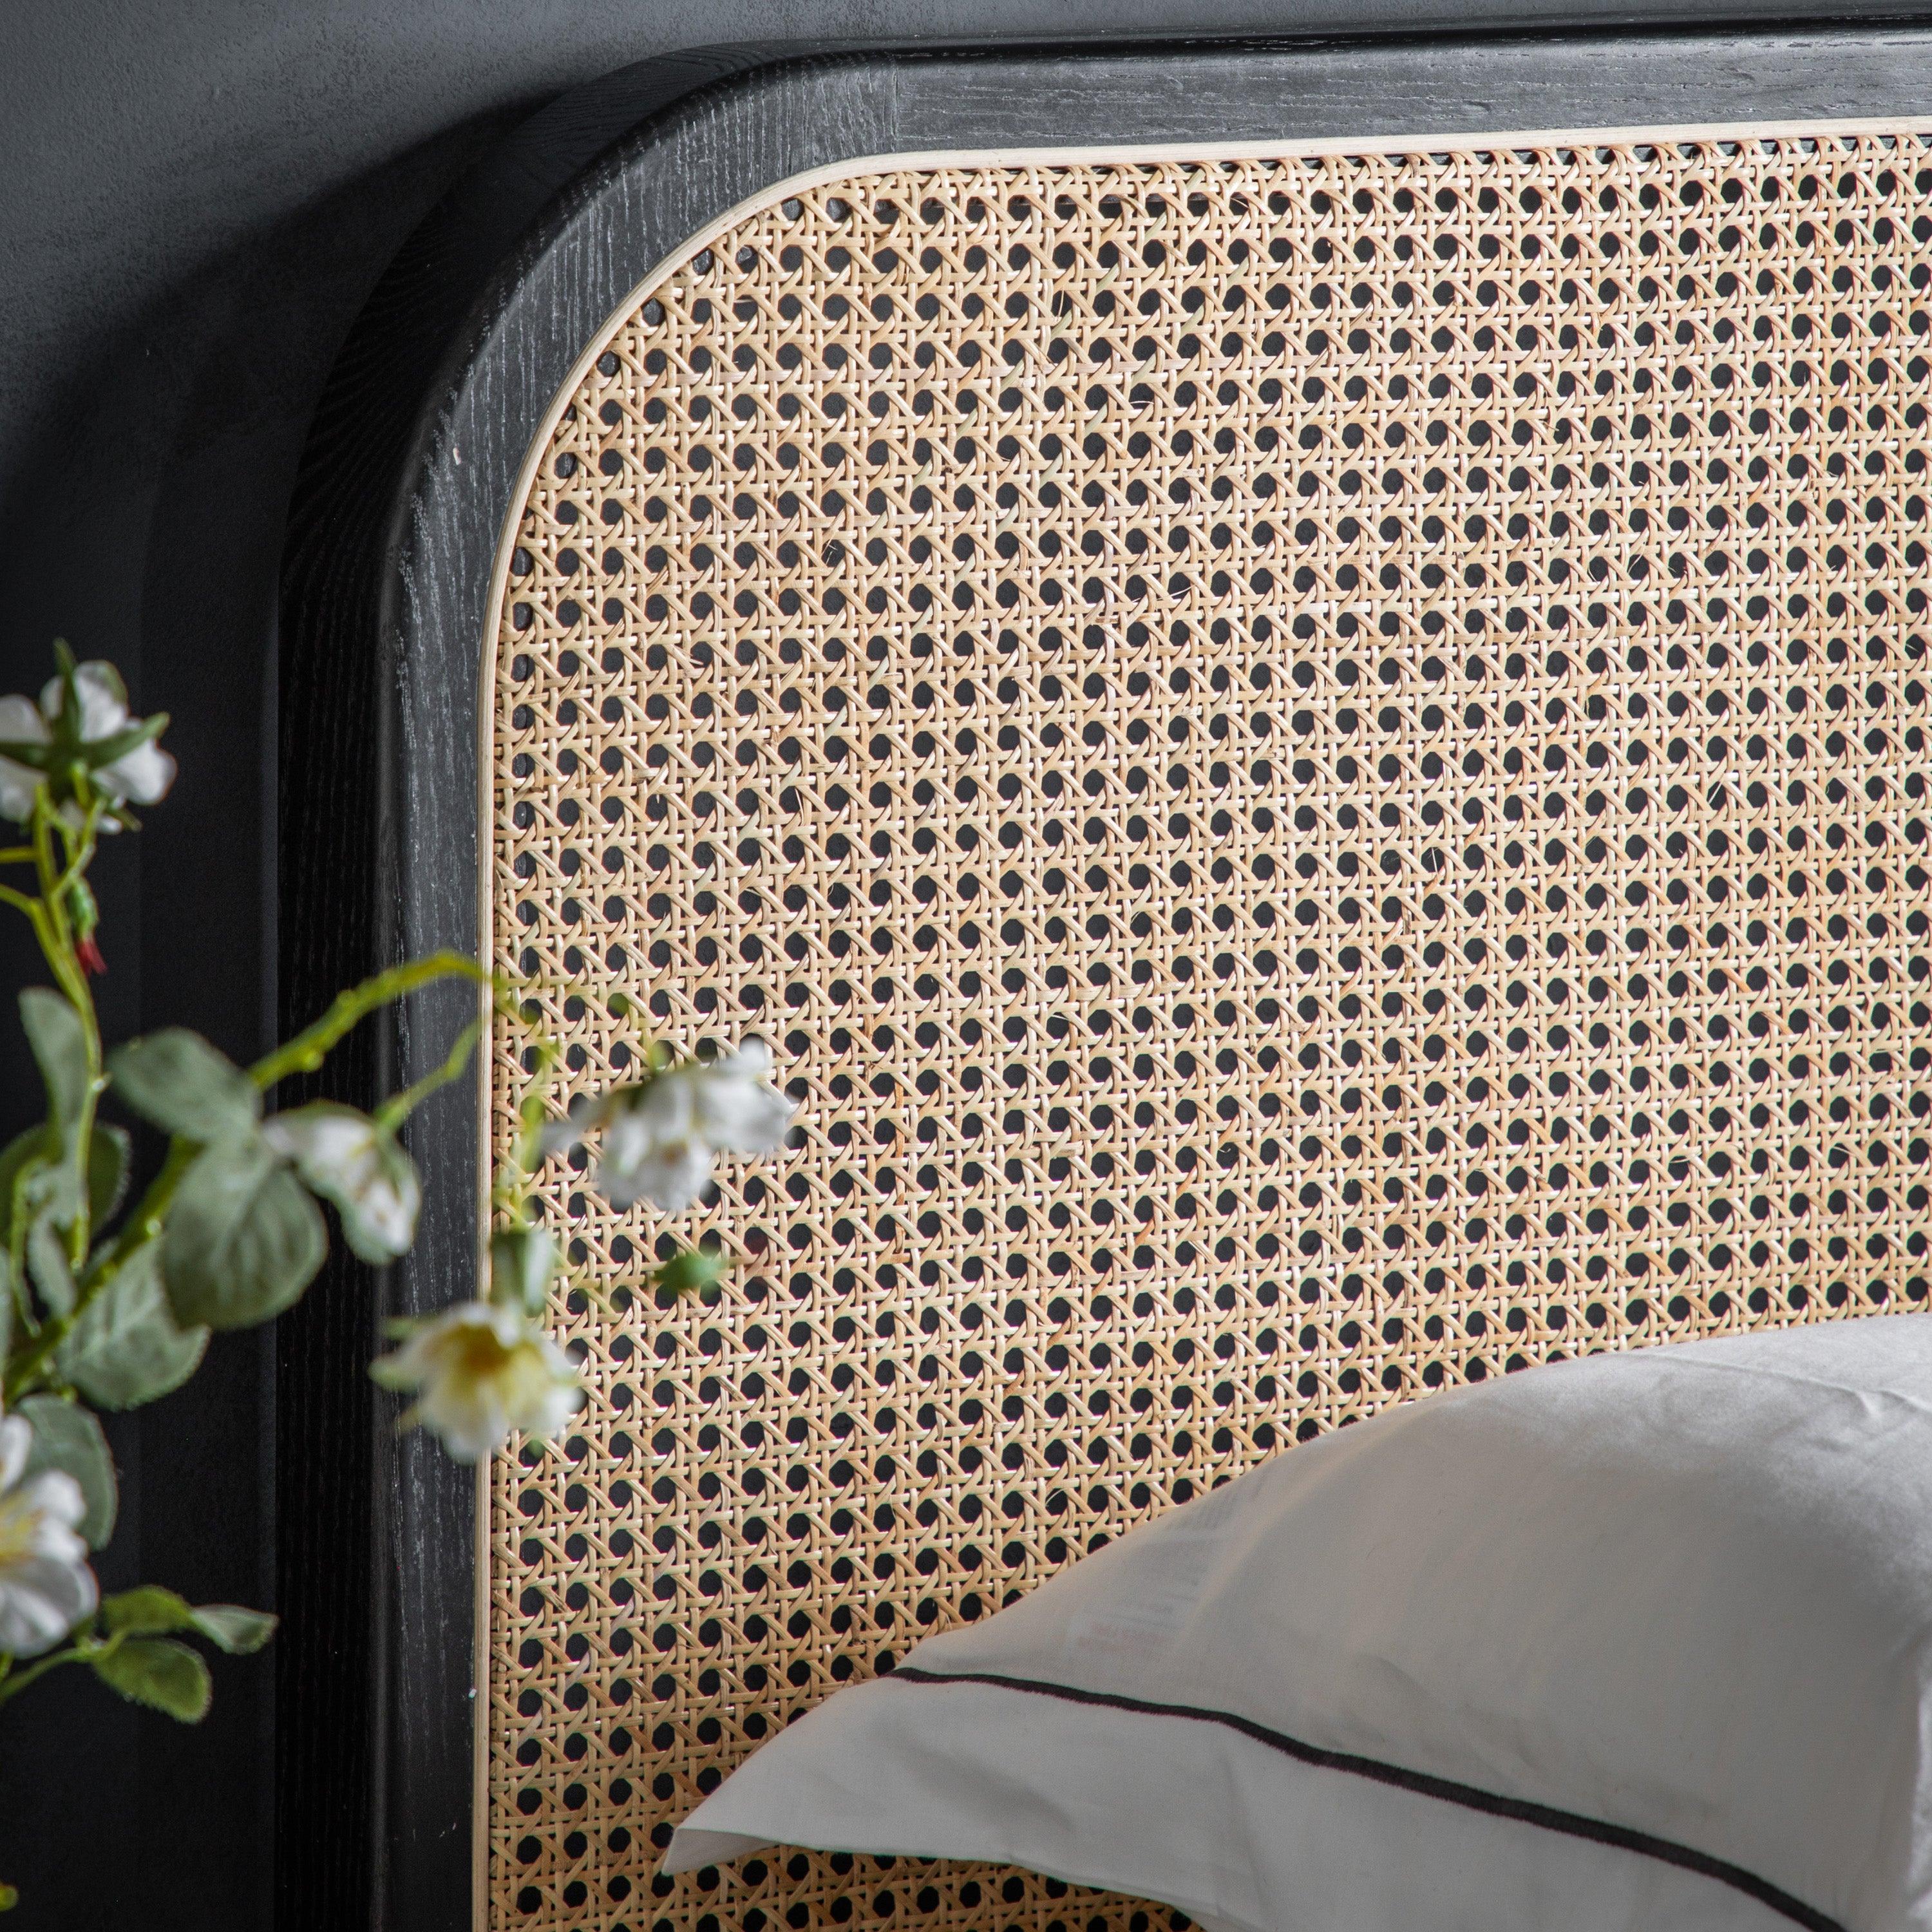 Severin Rattan Double 4'6 Bed with Black Oak Wood Frame - Maison Rêves UK